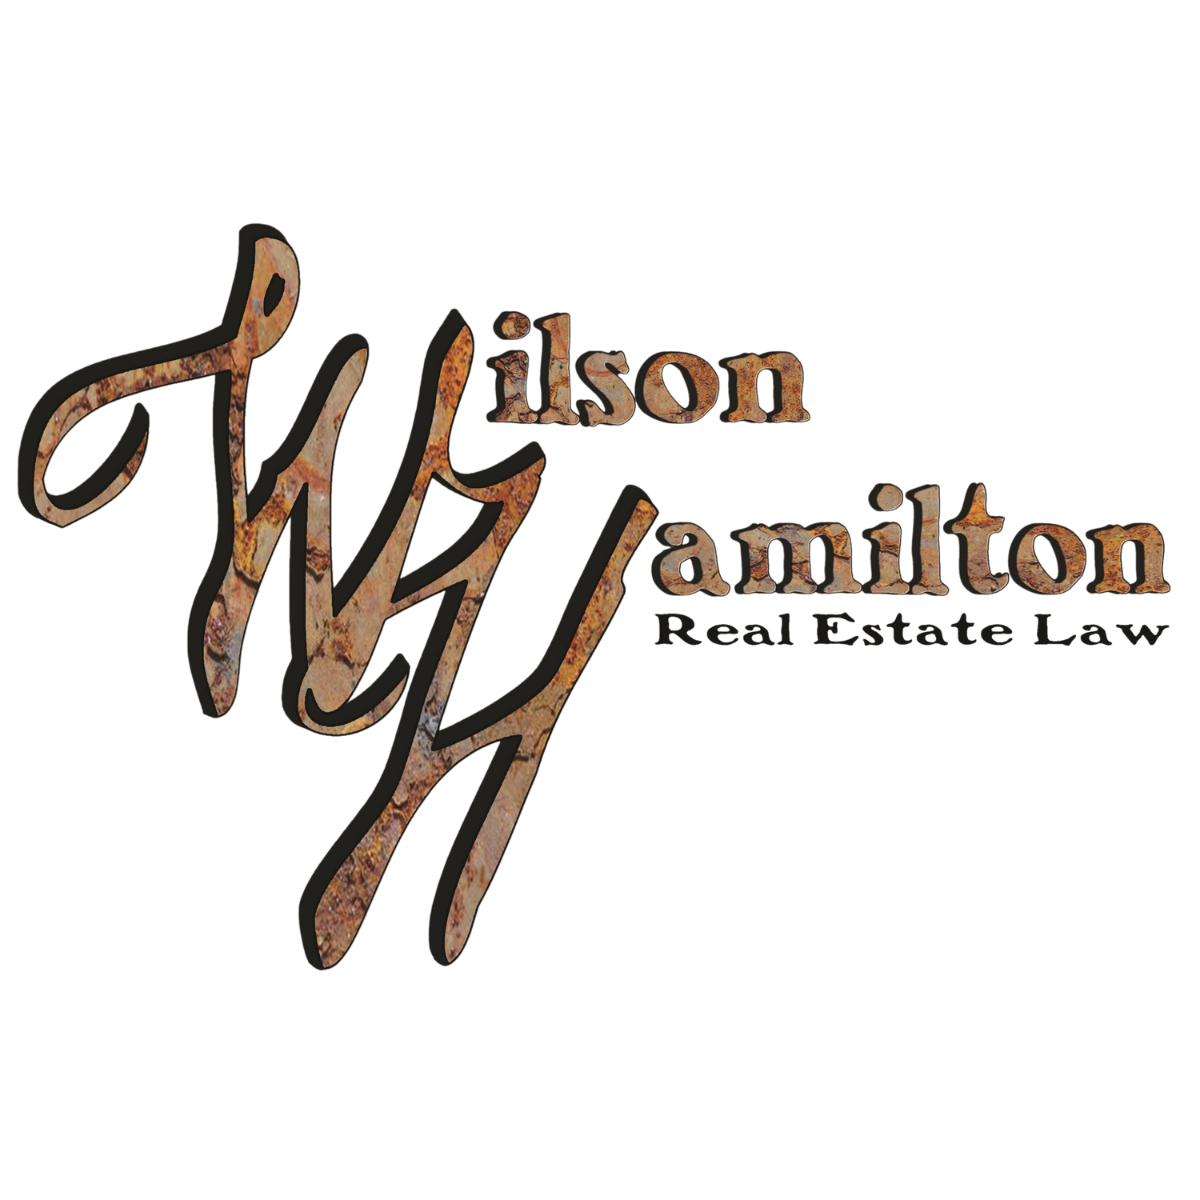 Wilson Hamilton LLC